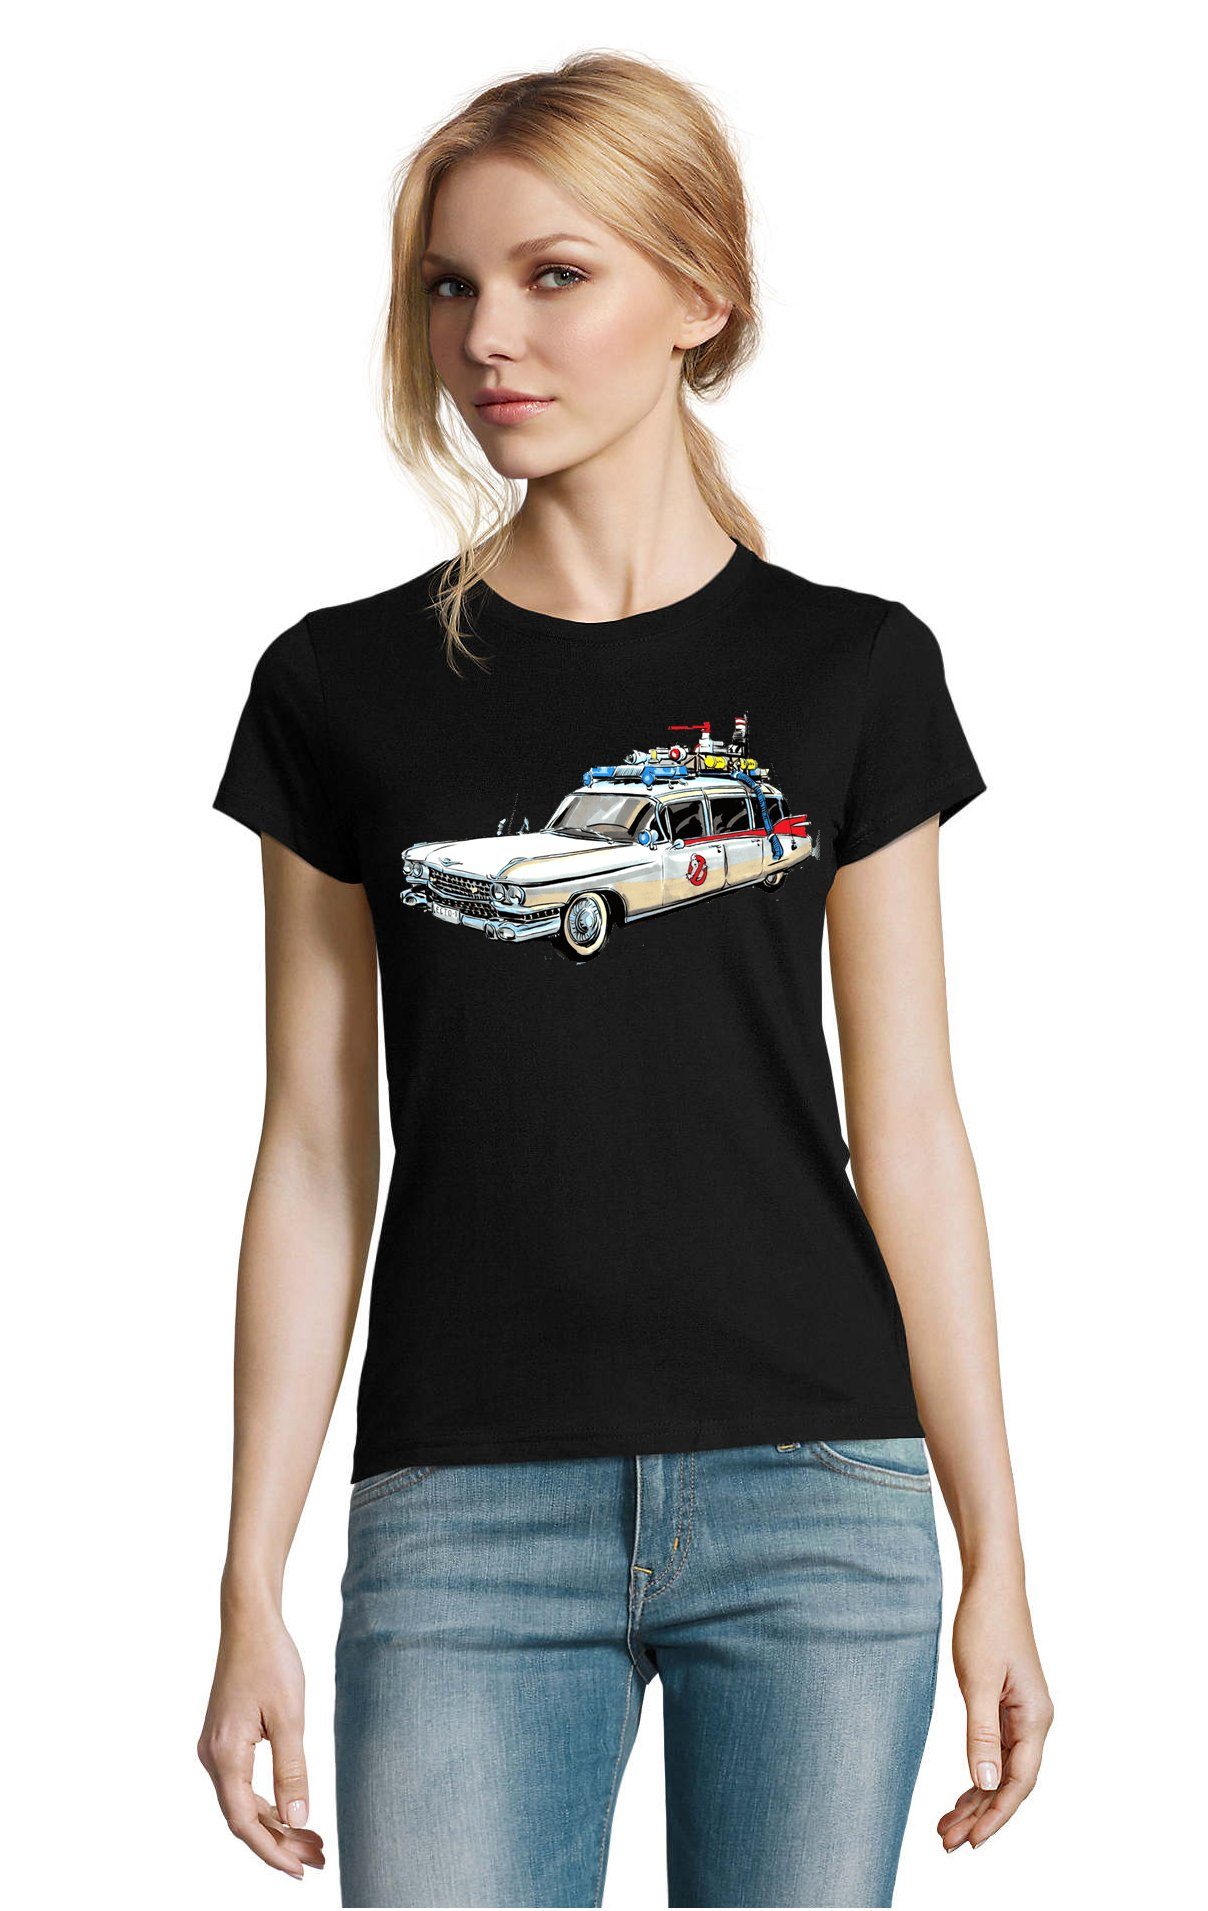 Blondie & Brownie T-Shirt Damen Ghostbusters Cars Auto Geisterjäger Geister Film Ghost